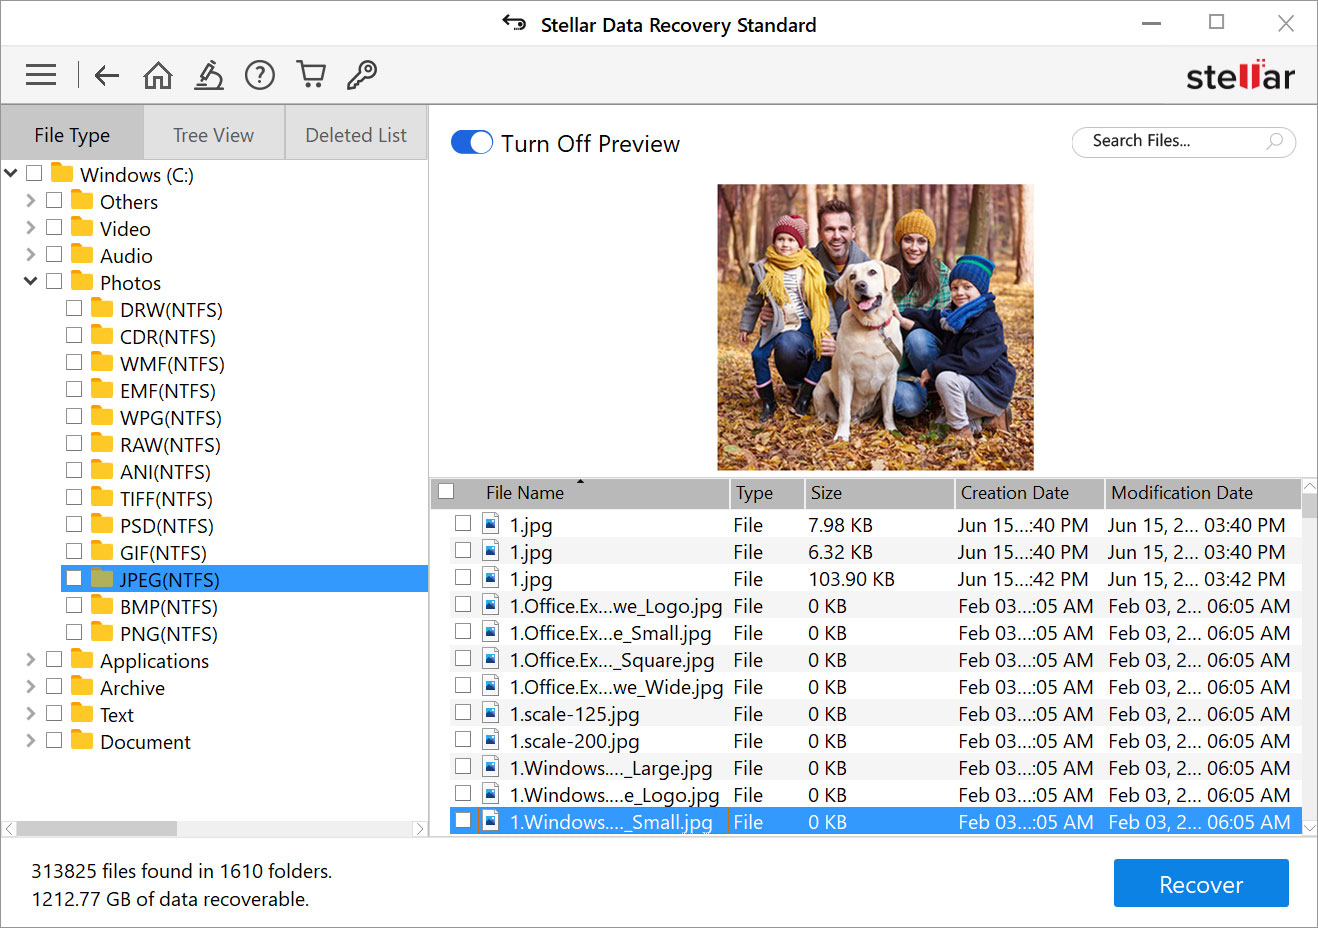 C:\Users\mansi.verma\Desktop\wdr-standard-select-files-to-recover.jpg